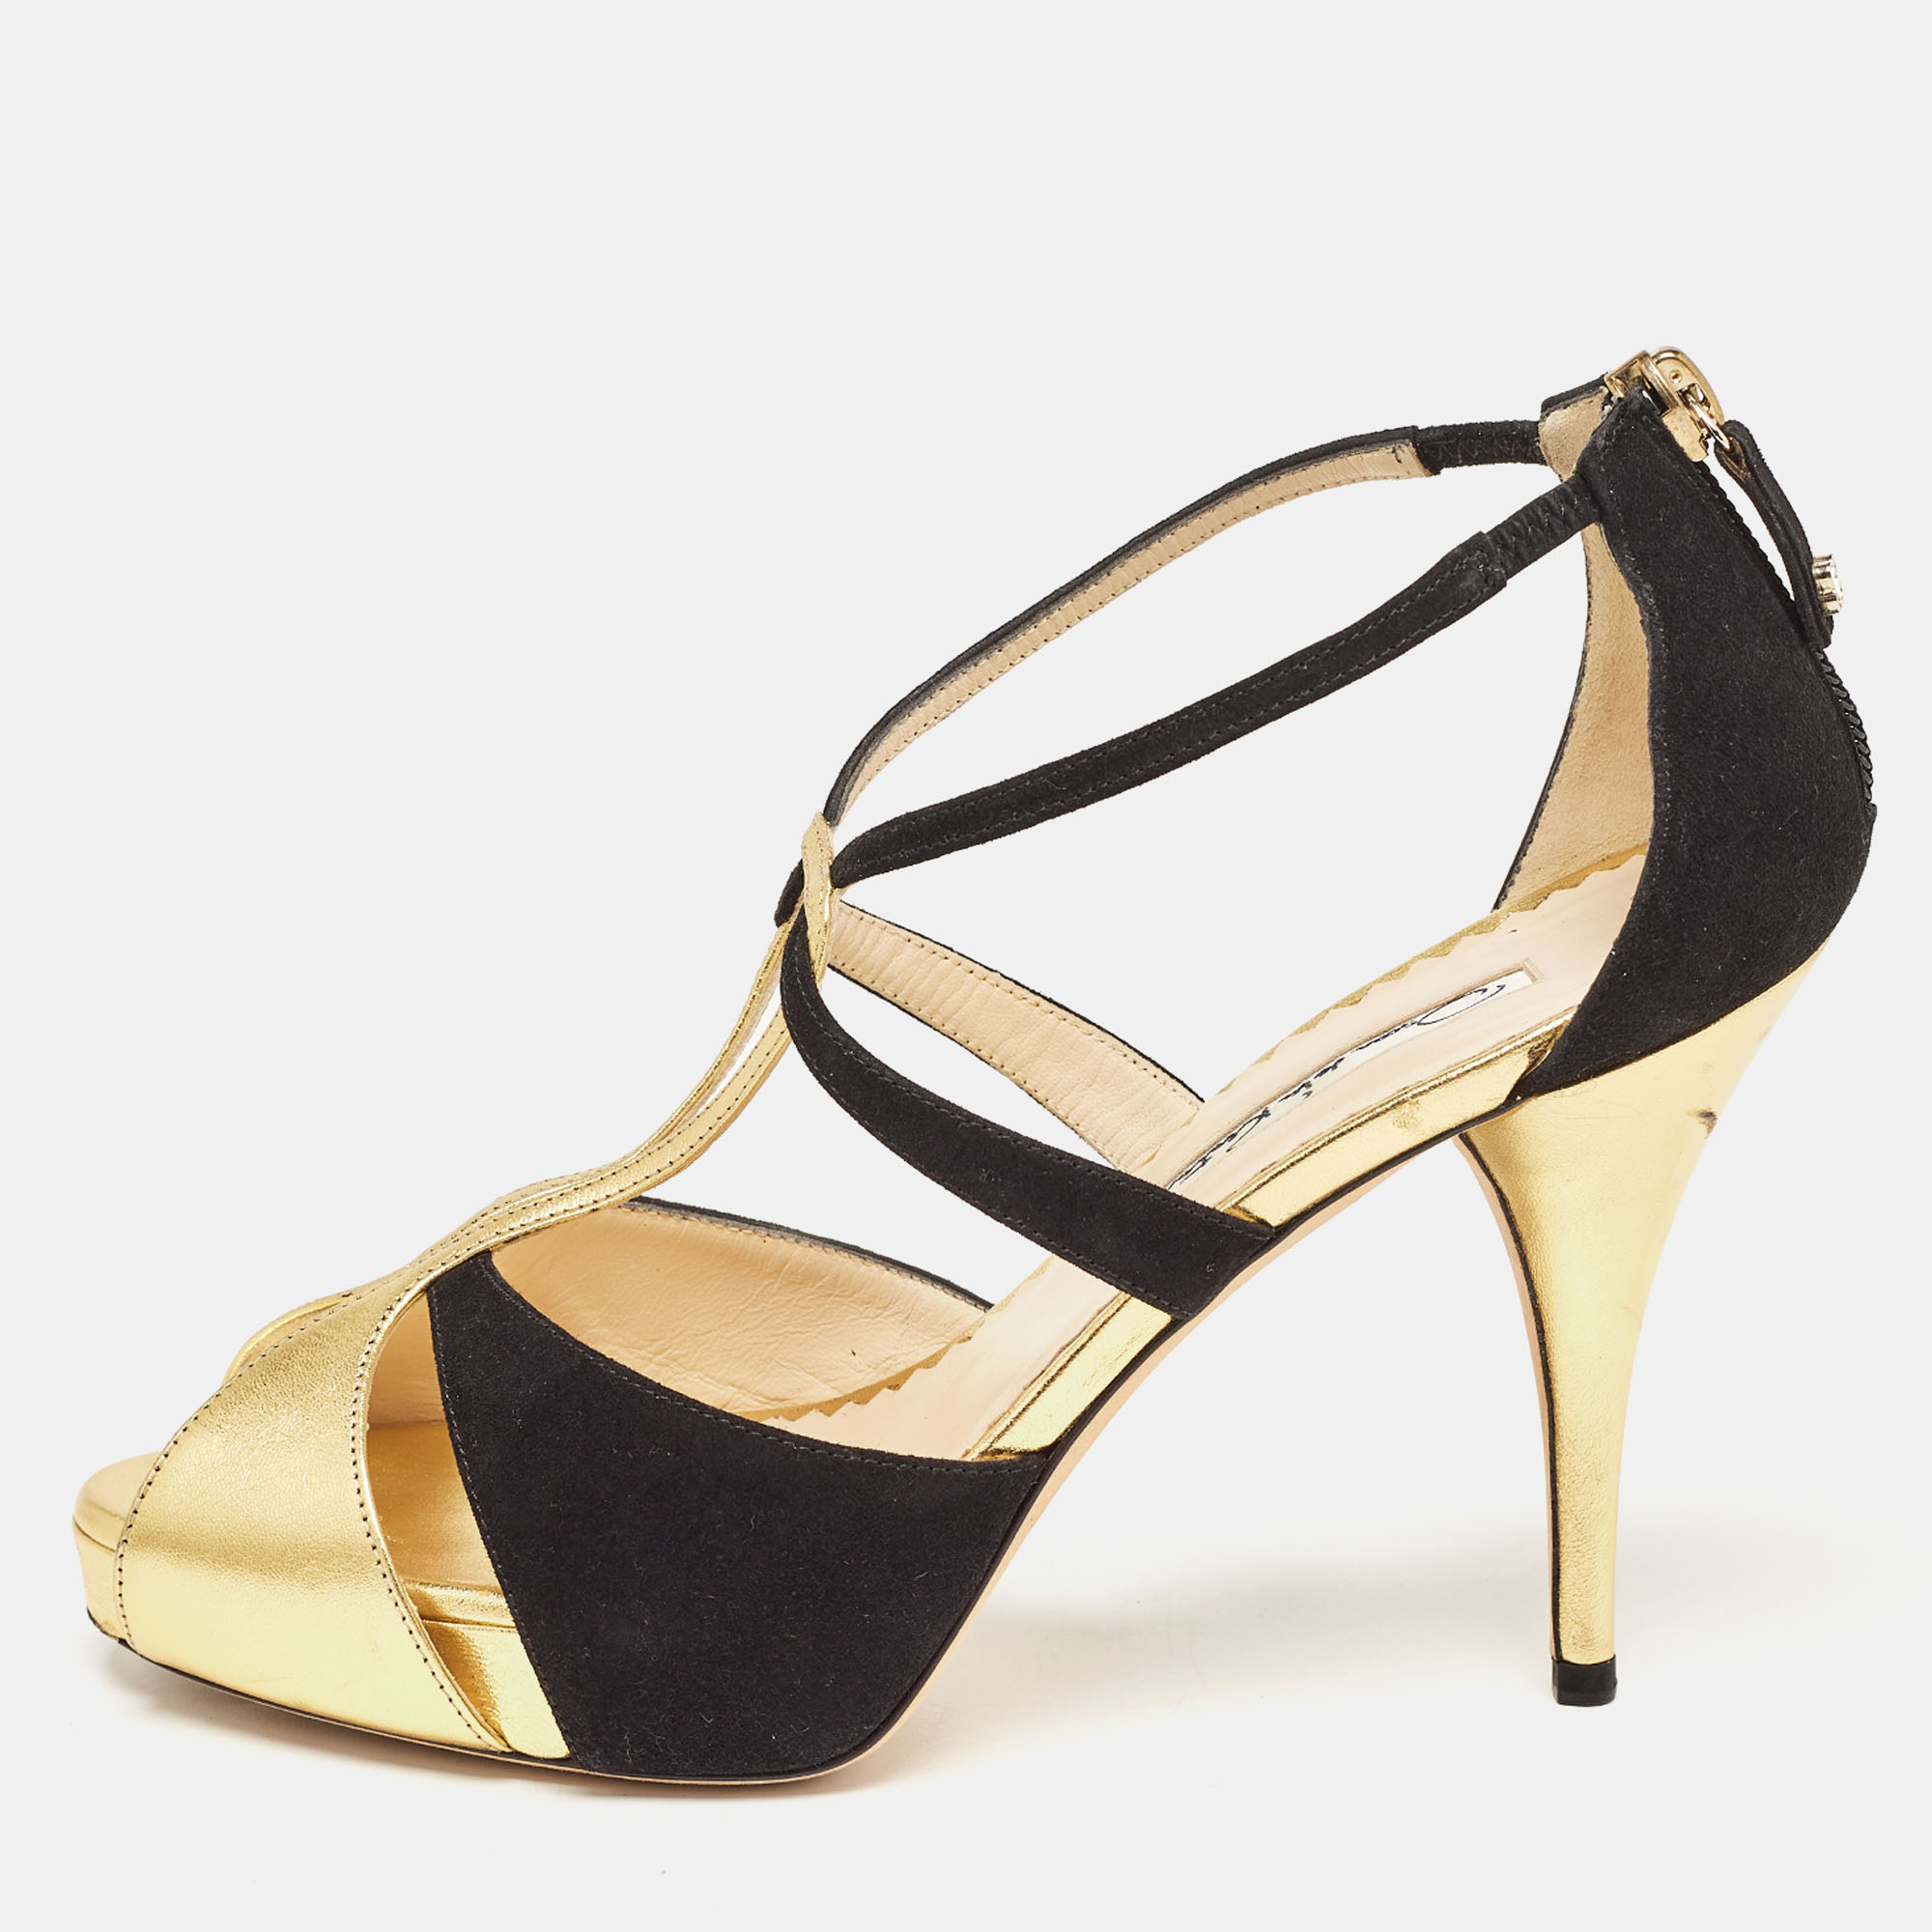 Oscar de la renta gold/black leather and suede ankle strap sandals size 36.5